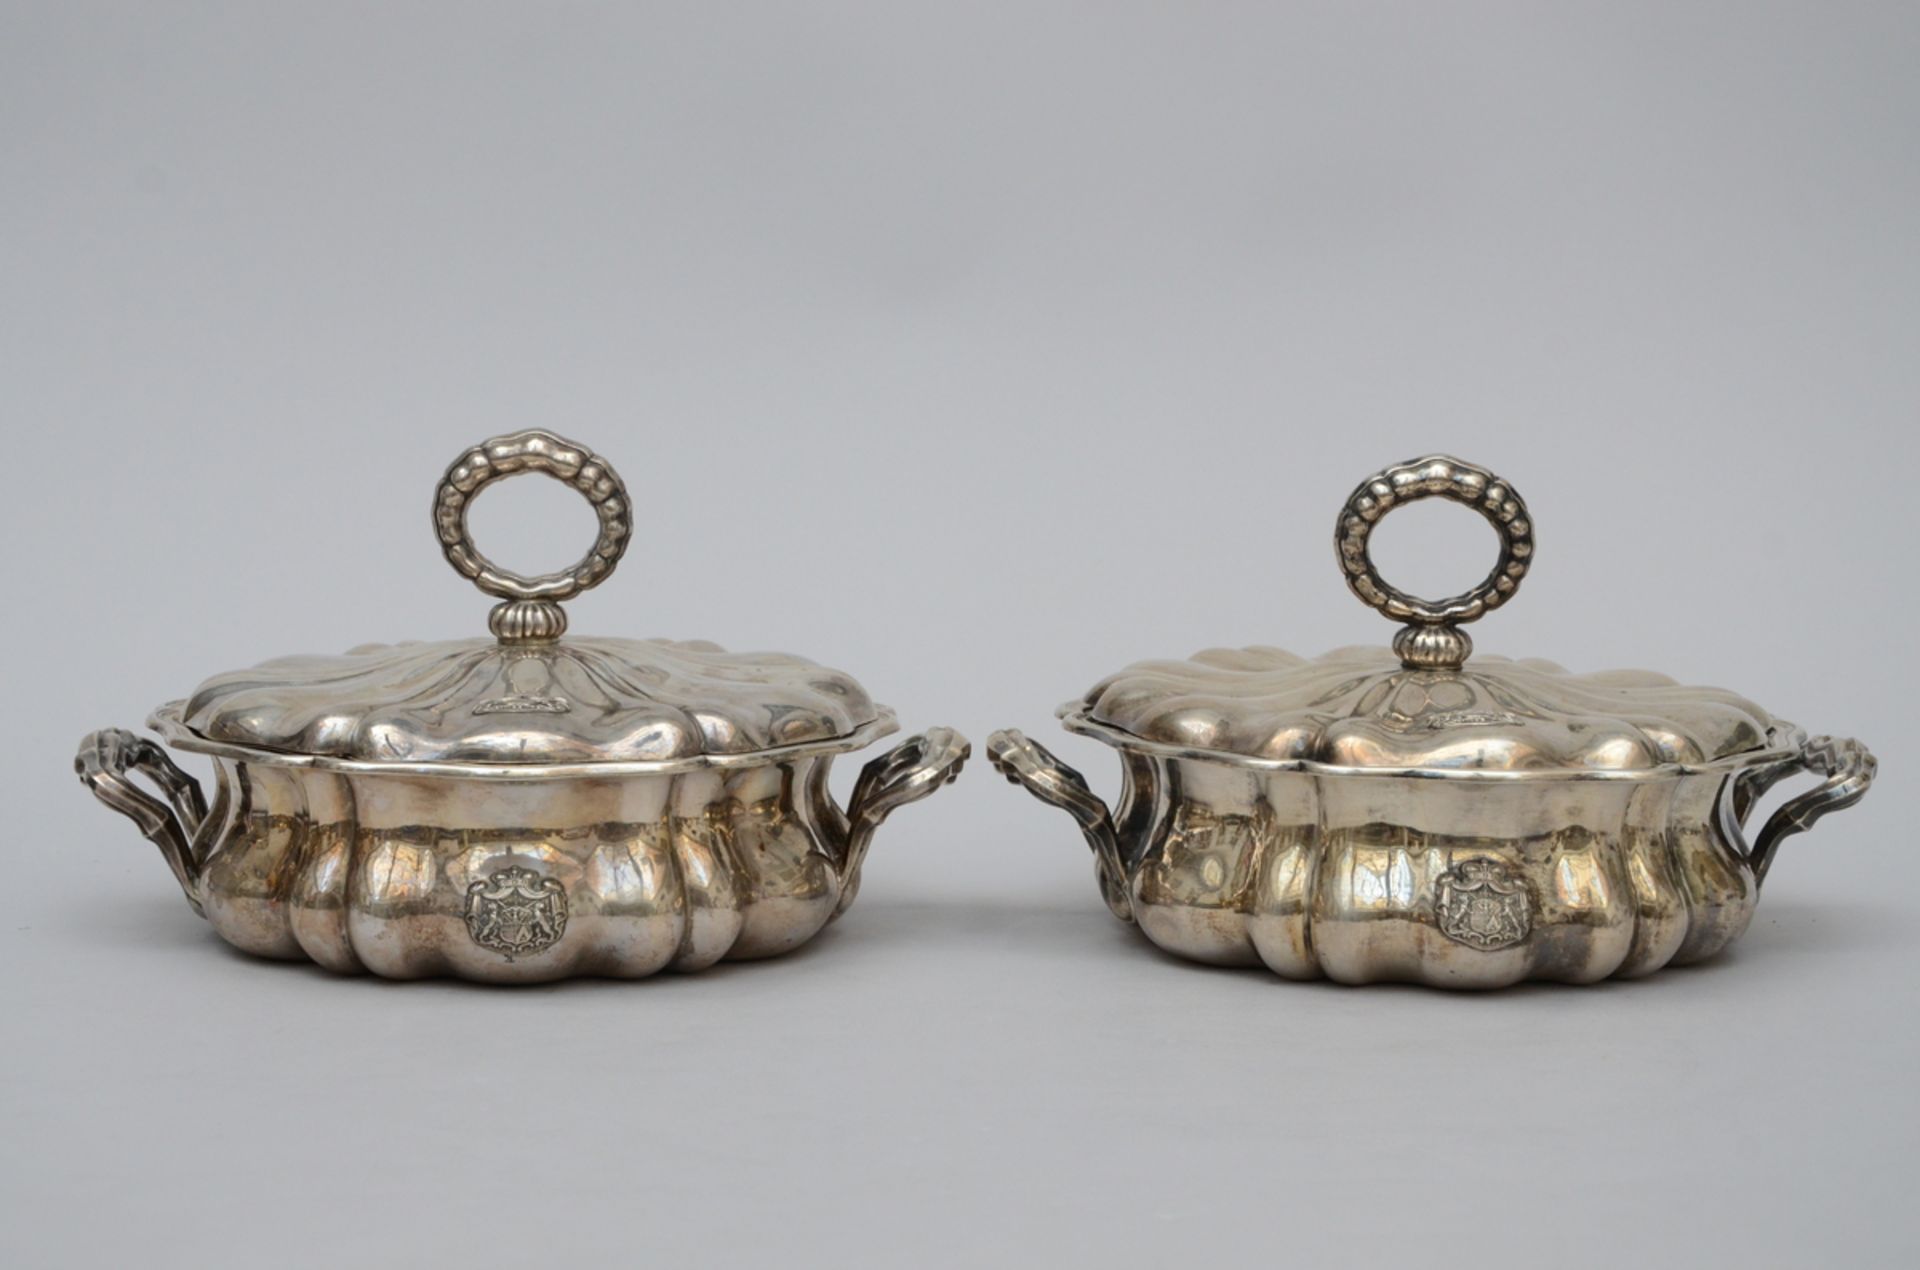 A pair of silver armorial vegetable tureens by Mayerhofer & Klinkosch, Vienna 19th century (